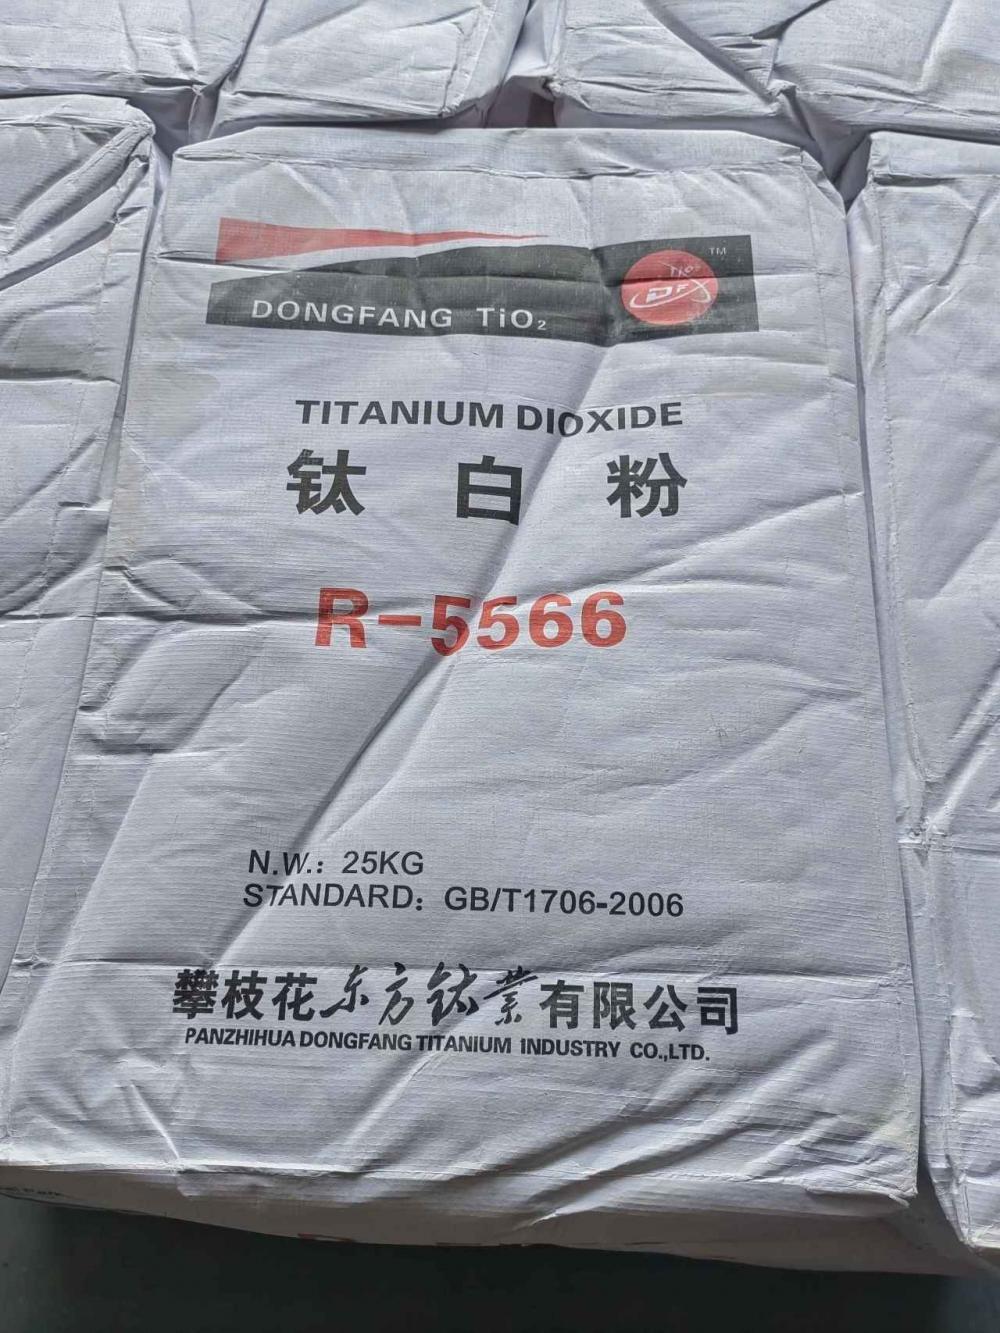 Hydrated Zirconium Silicate Treated Titanium Dioxide Rutile